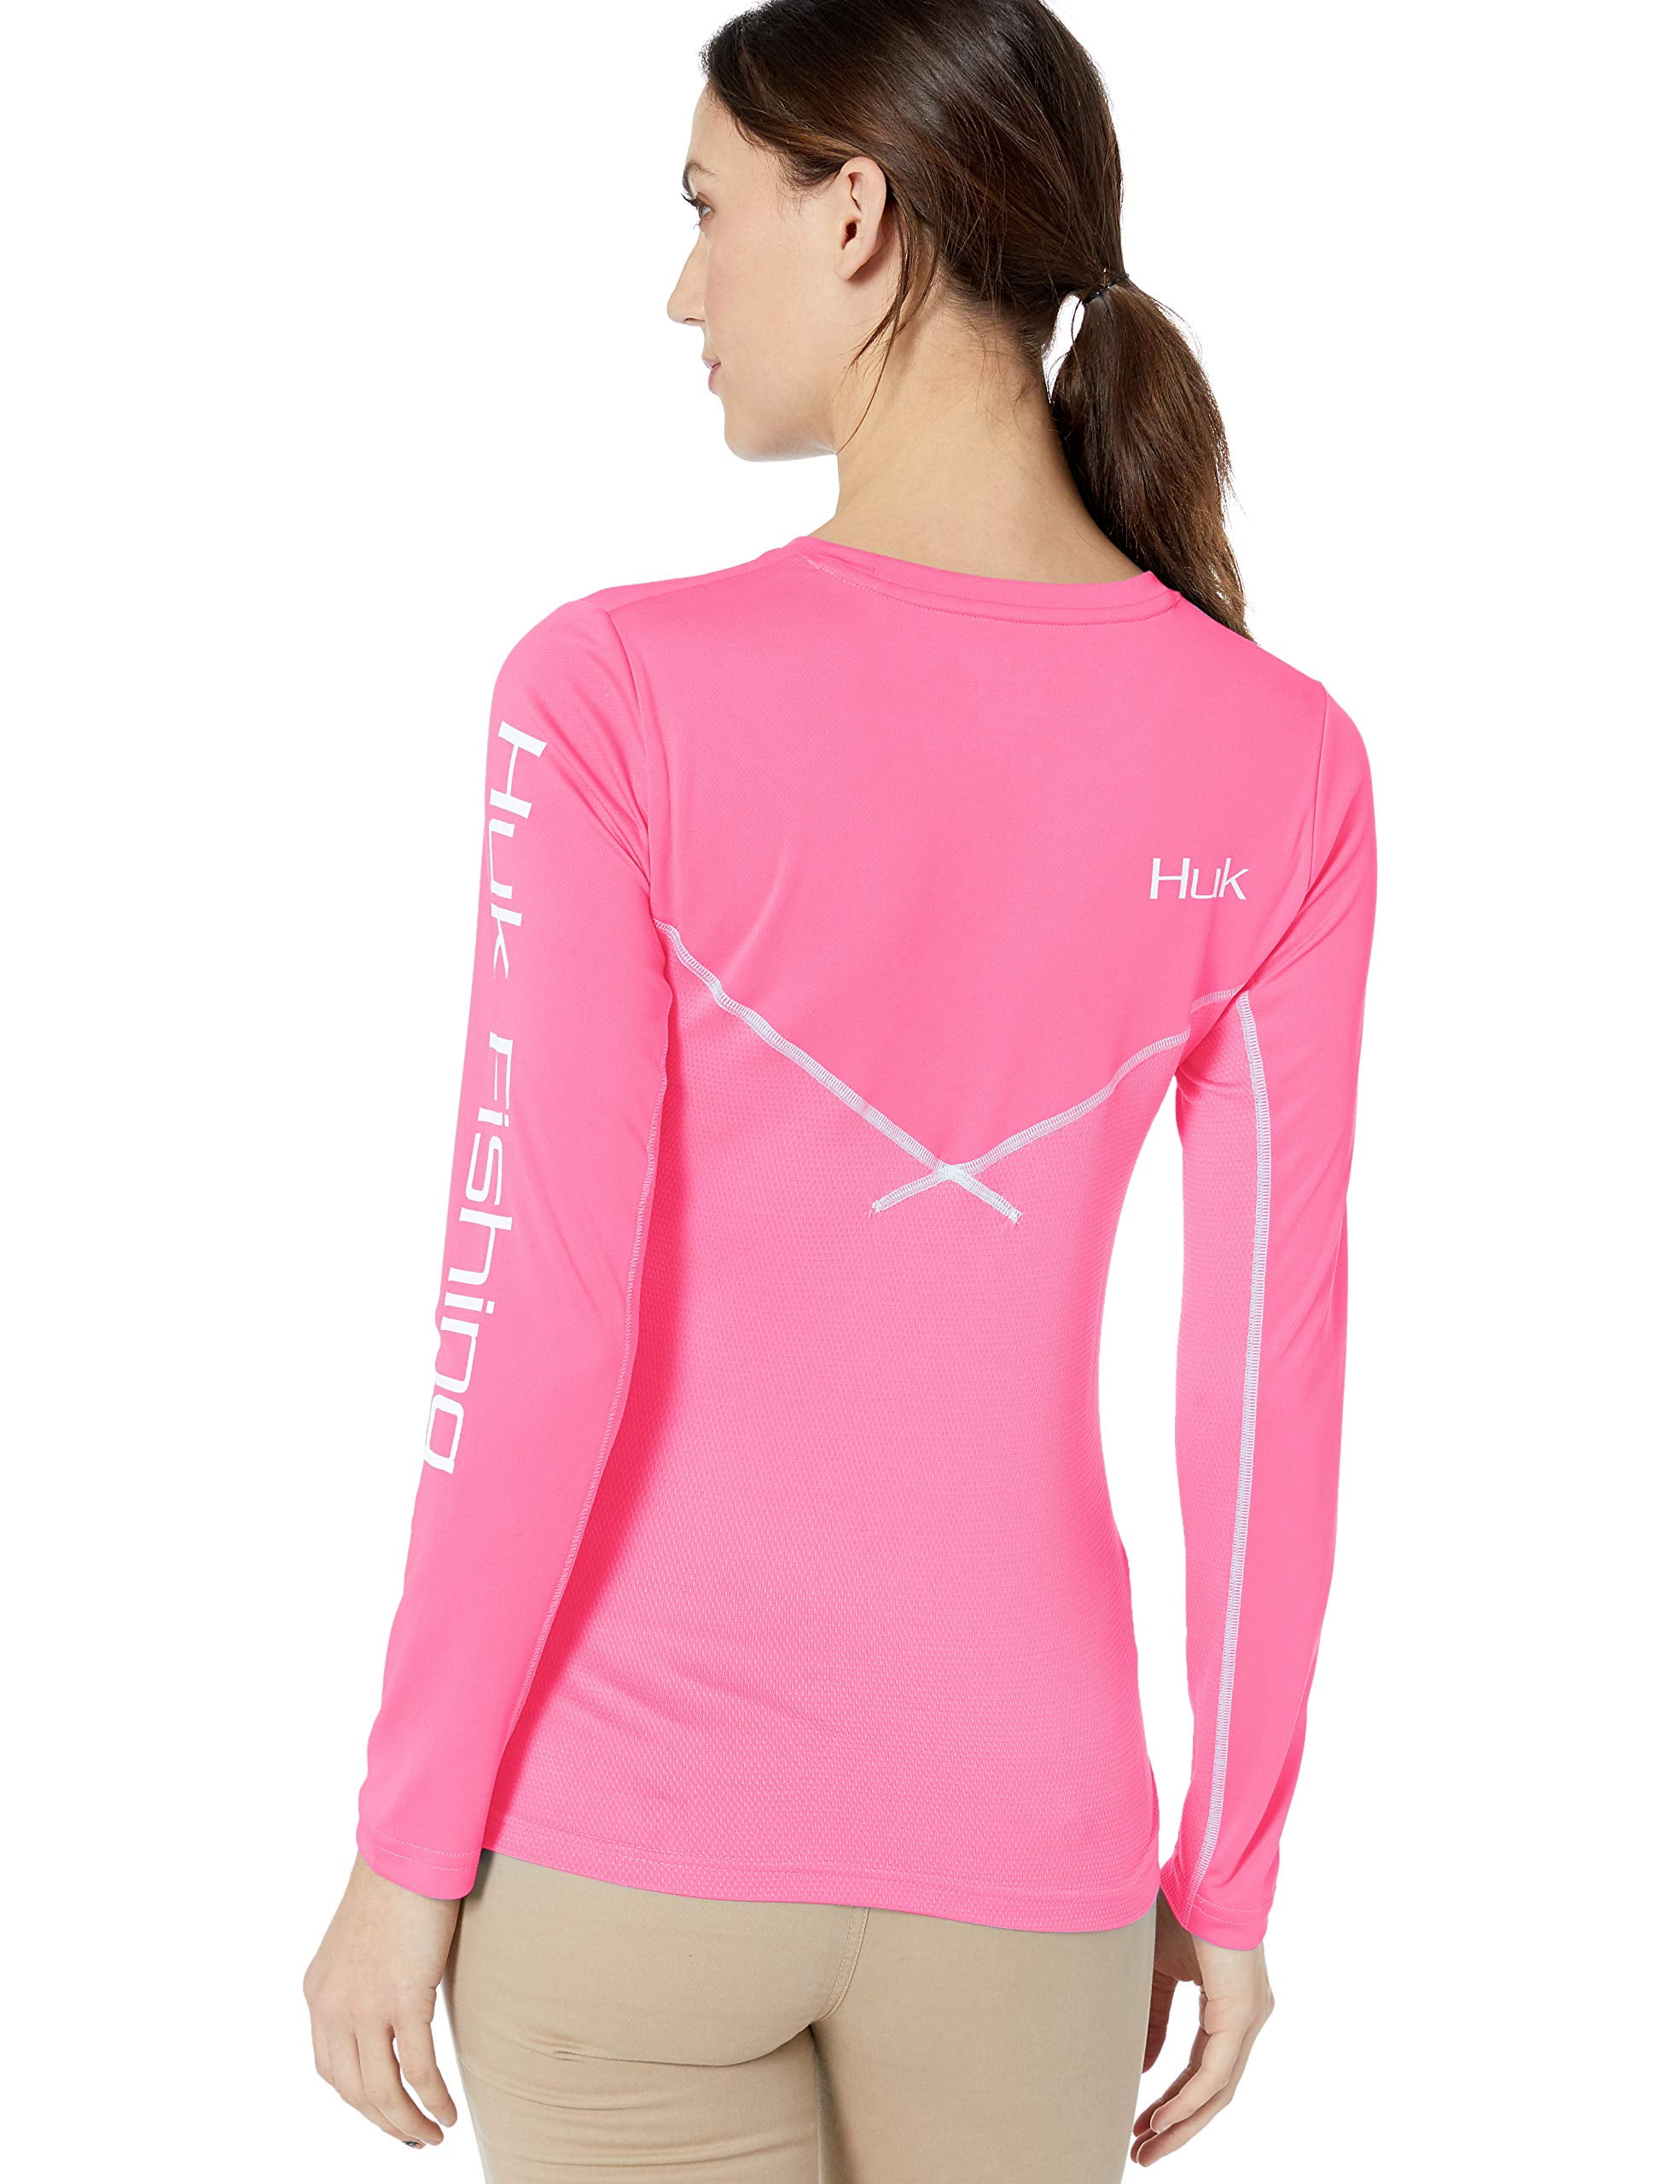 Huk Women's Icon X Long Sleeve Performance Shirt (Hot Pink, Small) 